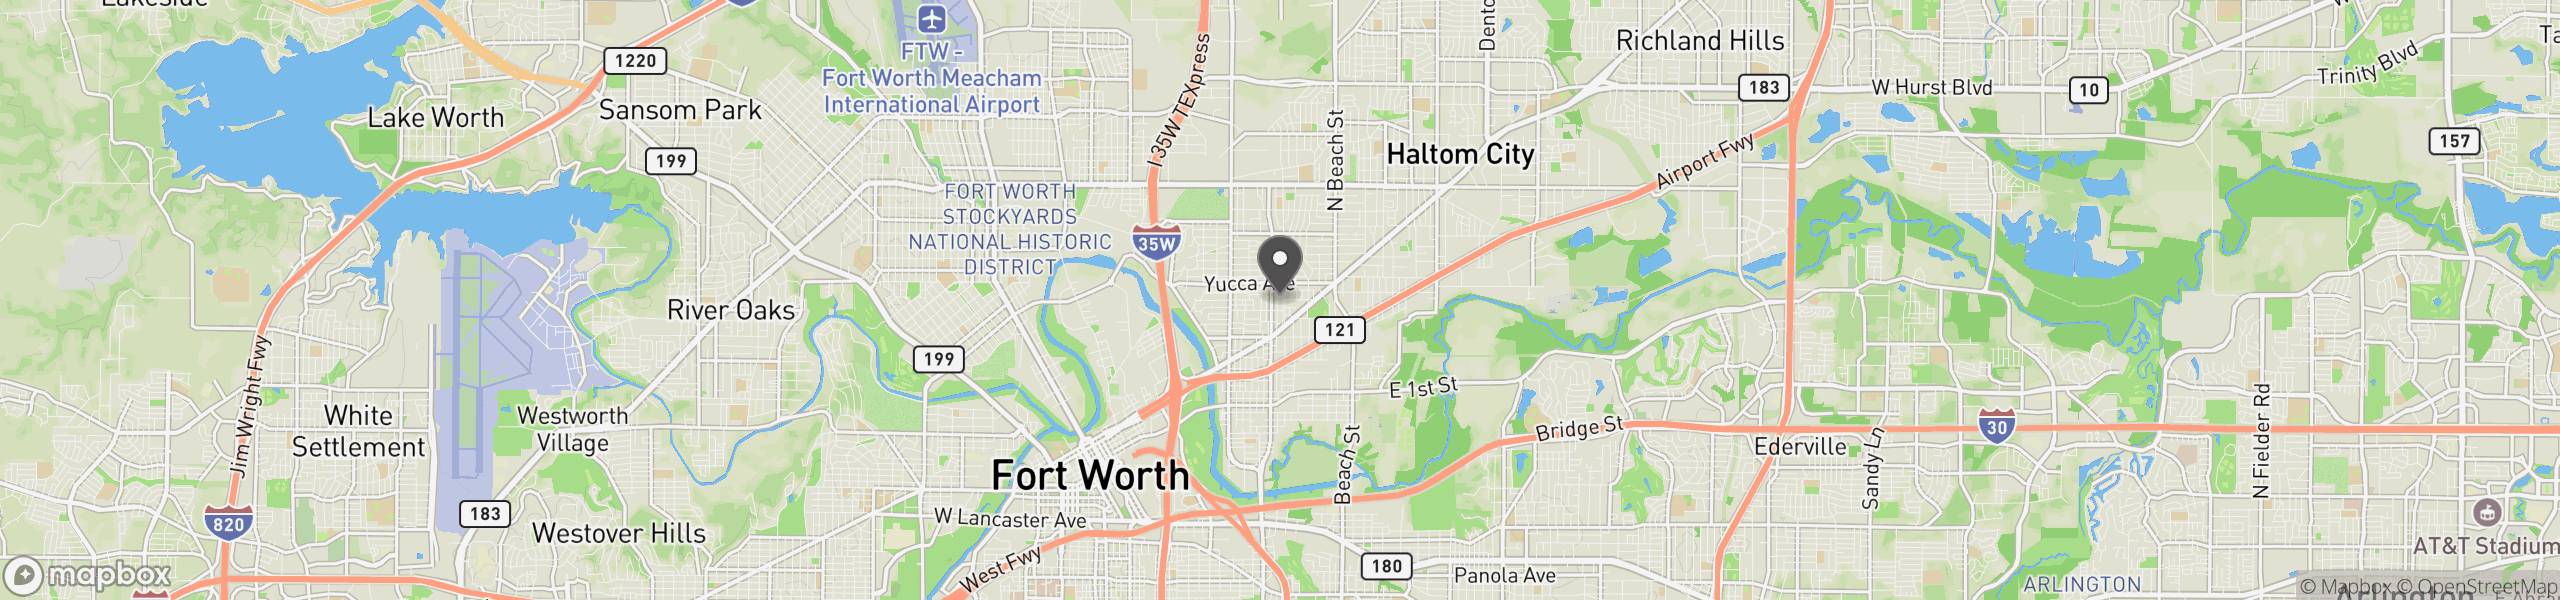 Fort Worth, TX 76111